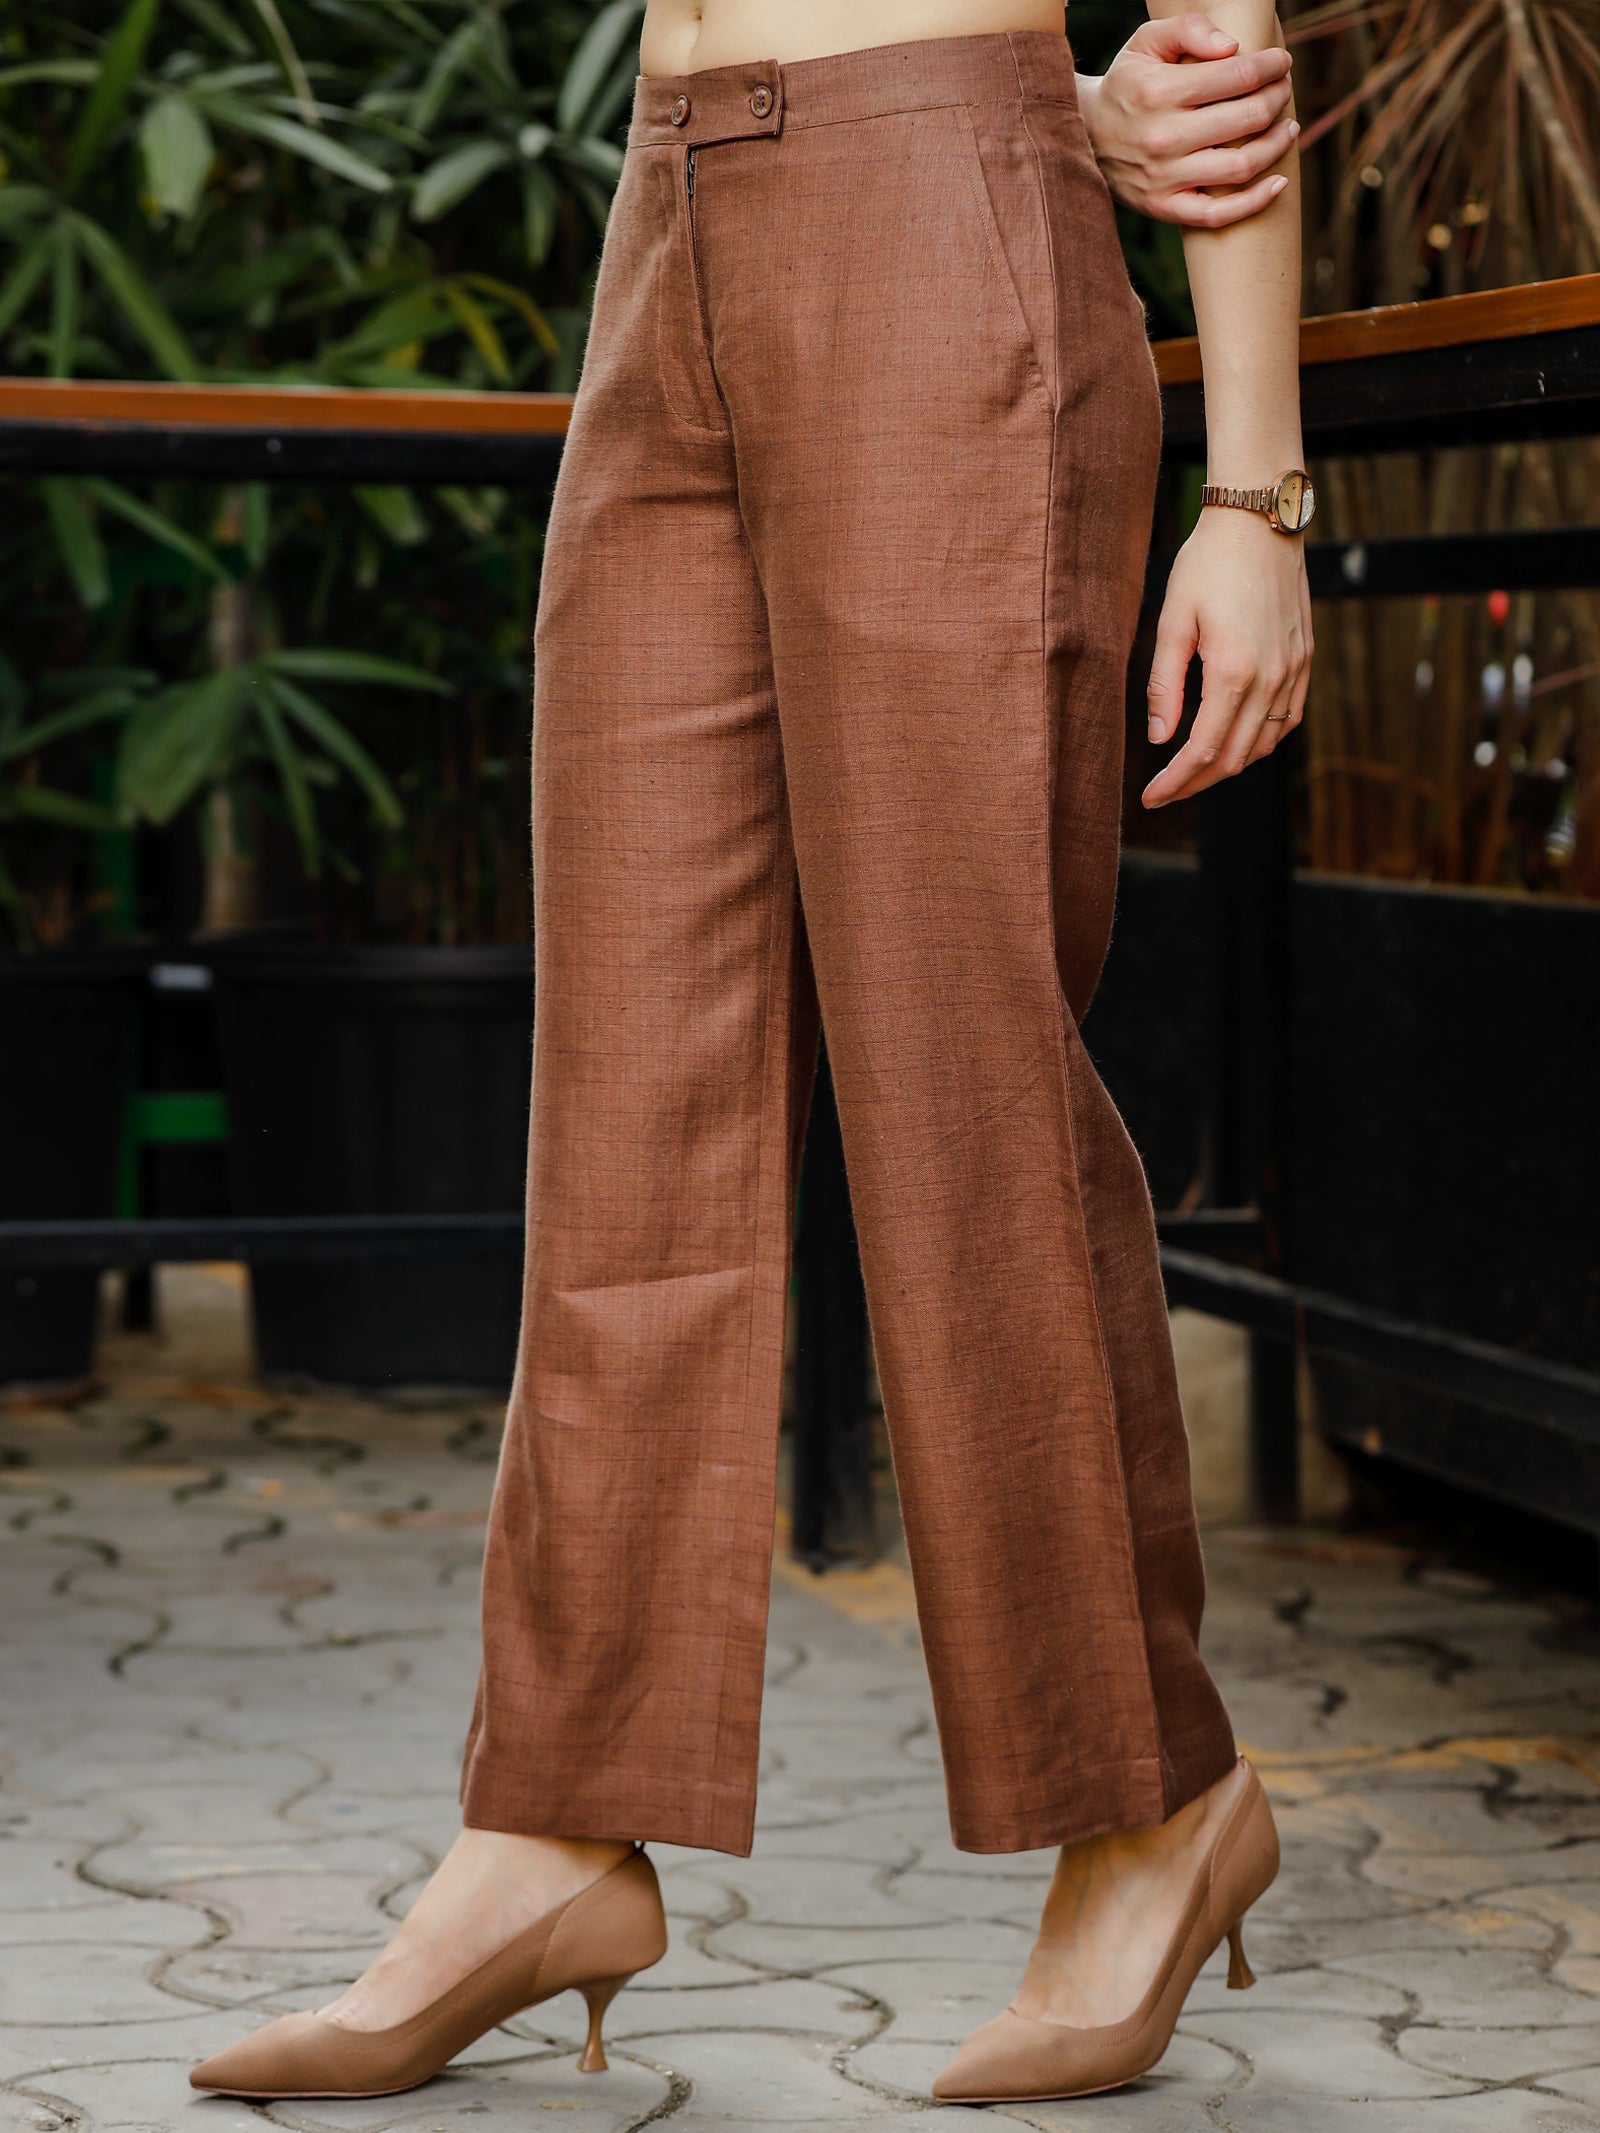 M&S Marks Spencer Chocolate Brown Trousers Metallic Wool Linen Straight Leg  UK 8 | eBay